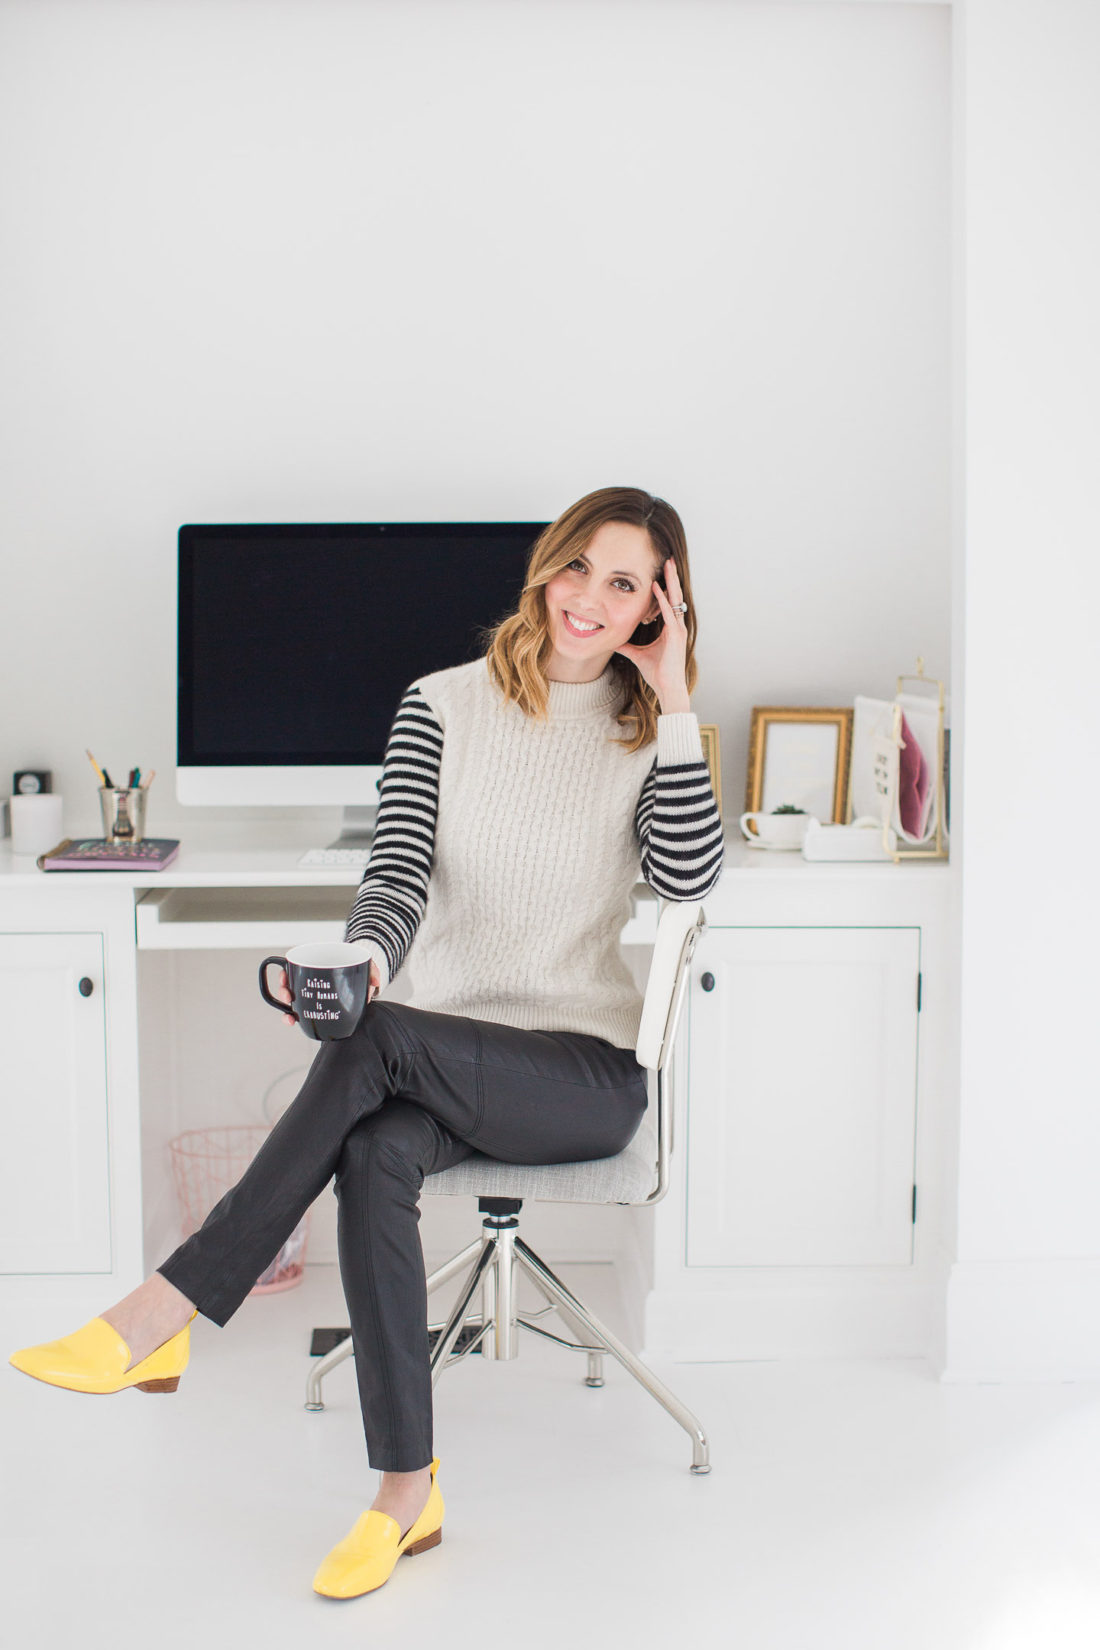 Lifestyle blogger Eva Amurri Martino is pictured in her studio